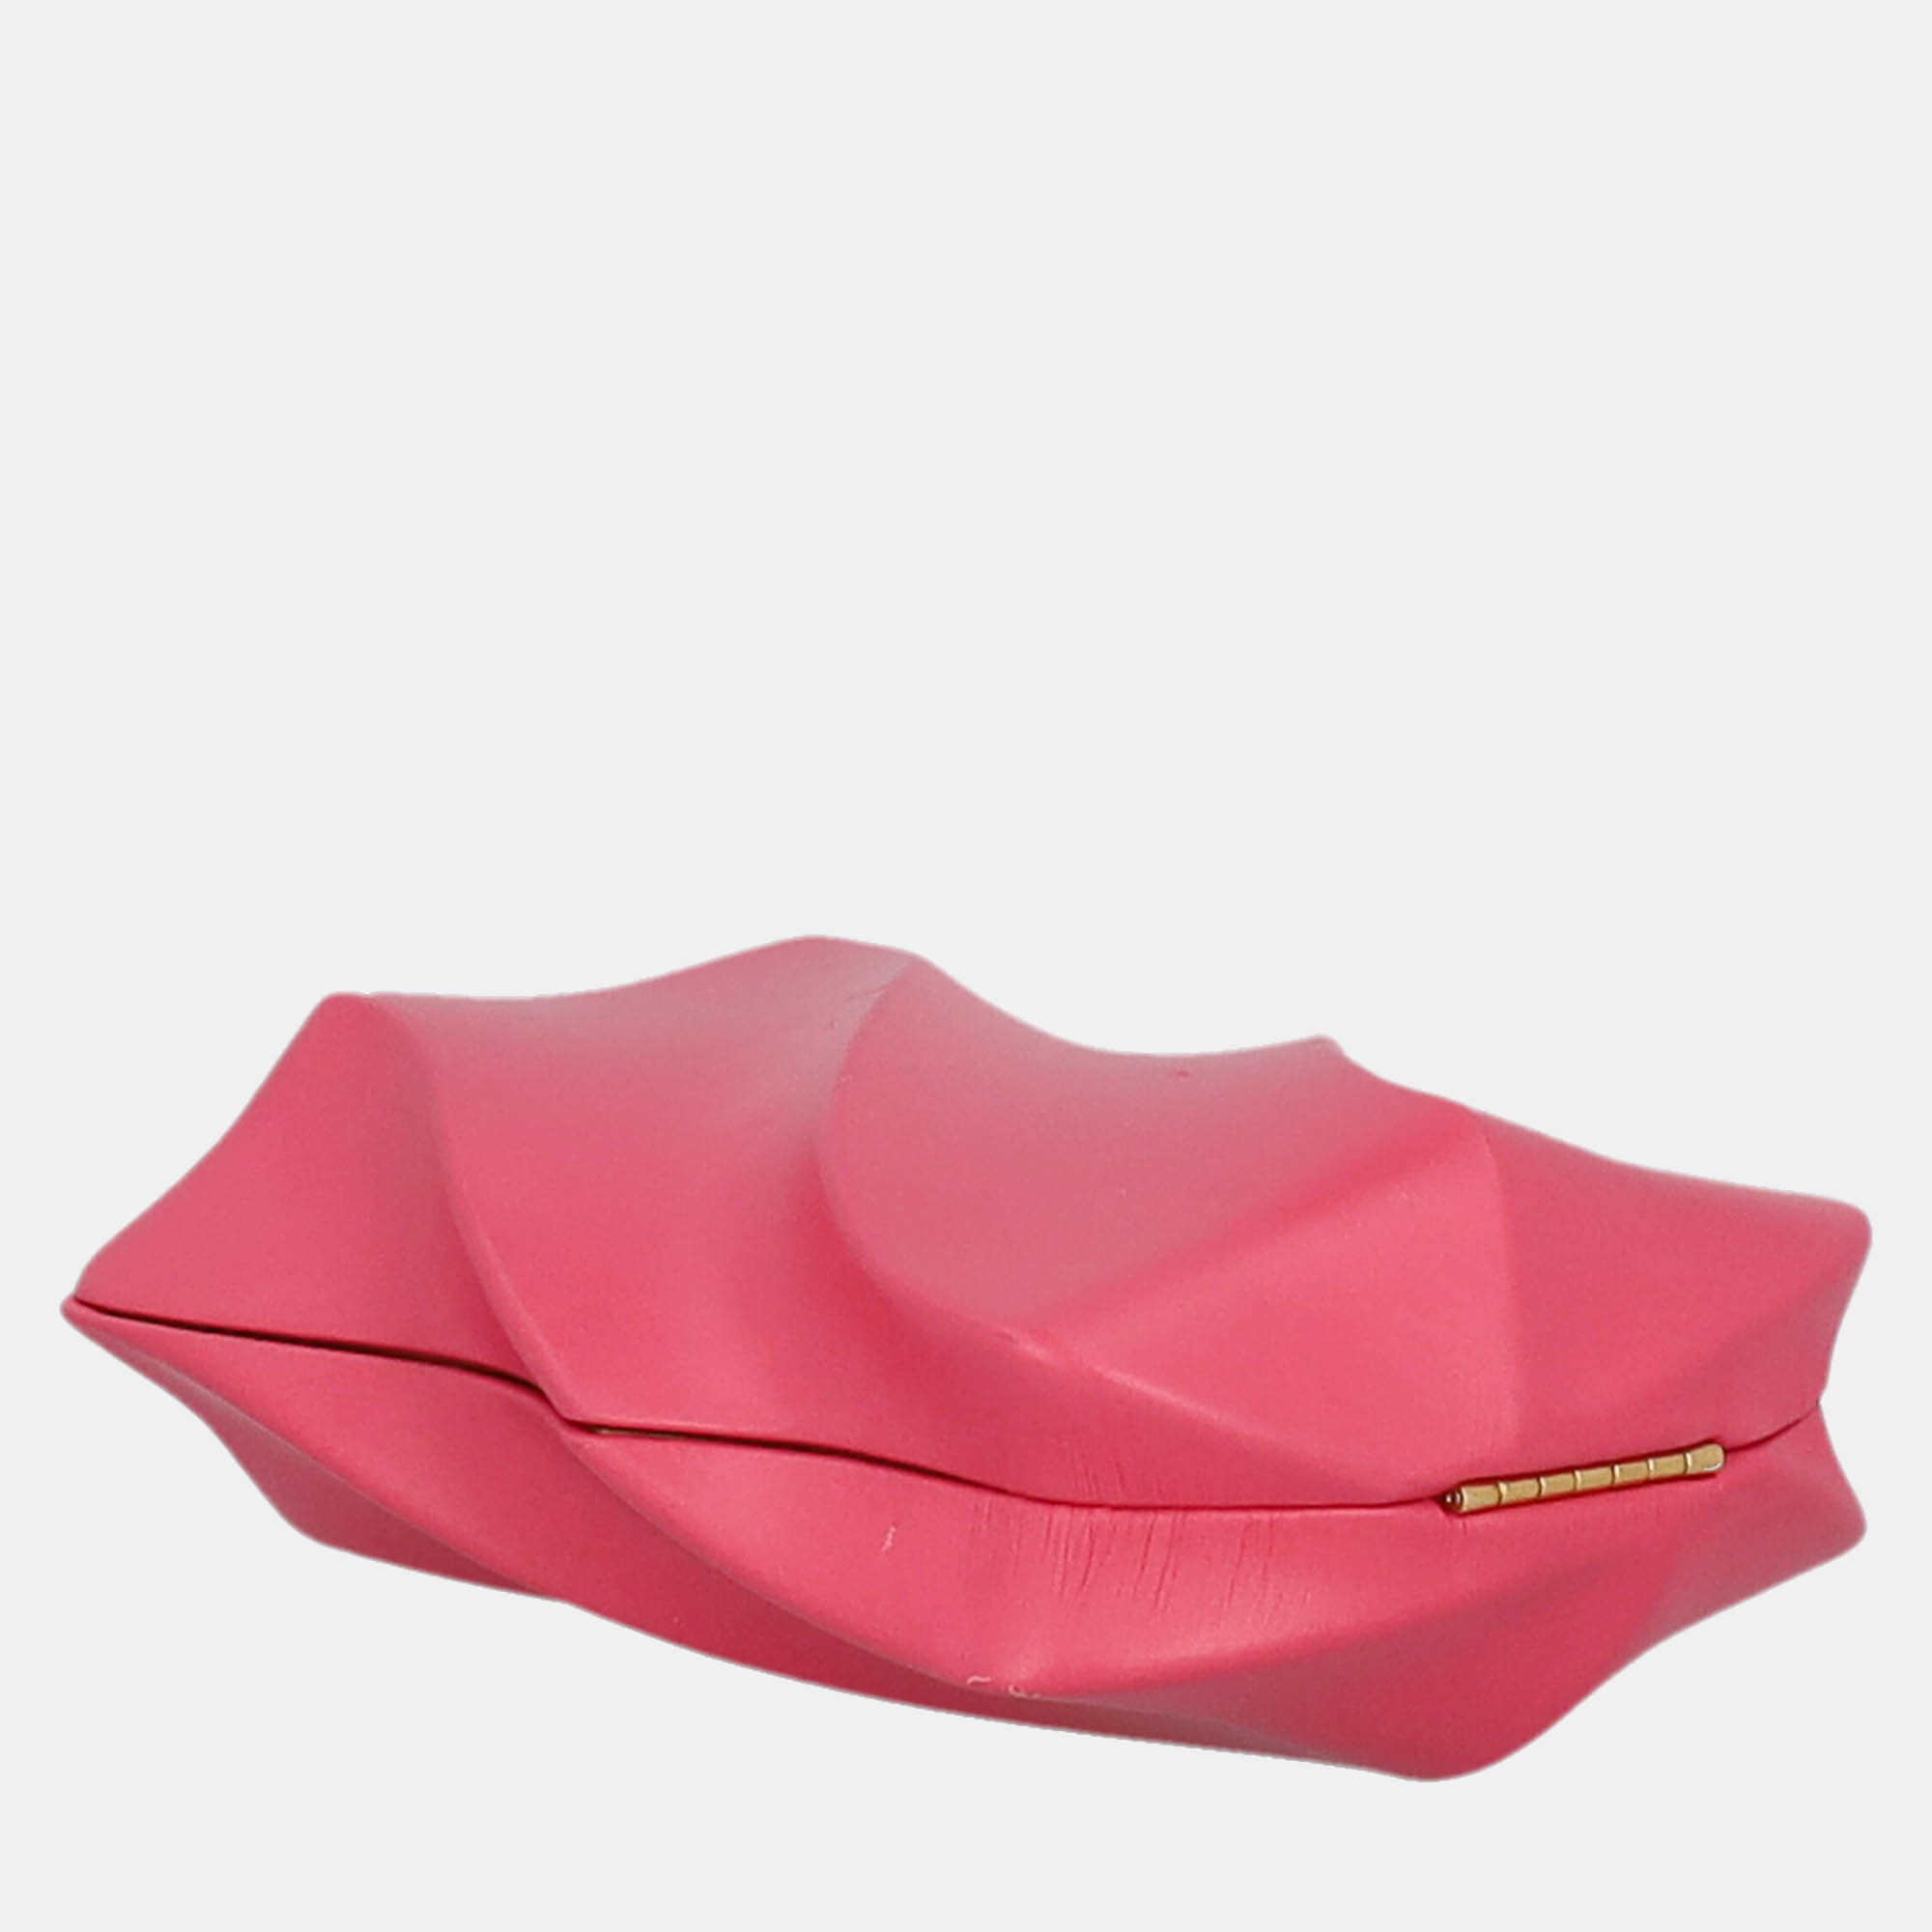 Bottega Veneta  Women's Leather Clutch Bag - Pink - One Size